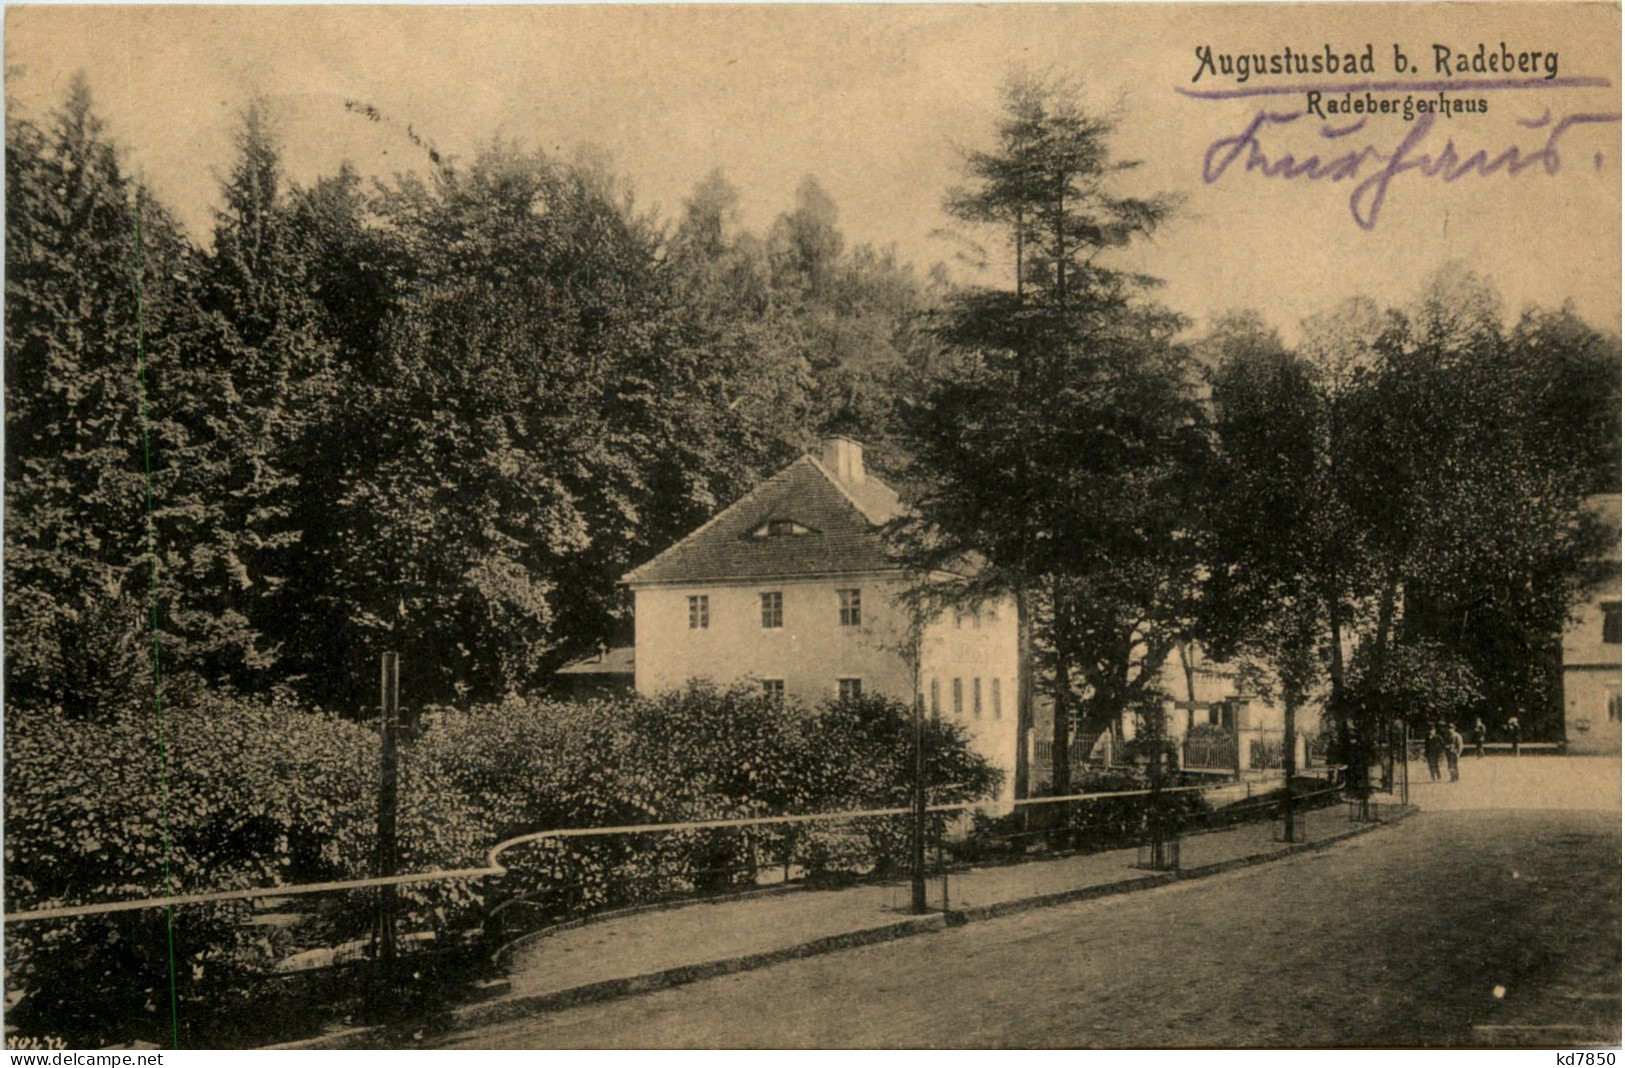 Augustusbad, B.Radeberg, Radebergerhaus - Bautzen